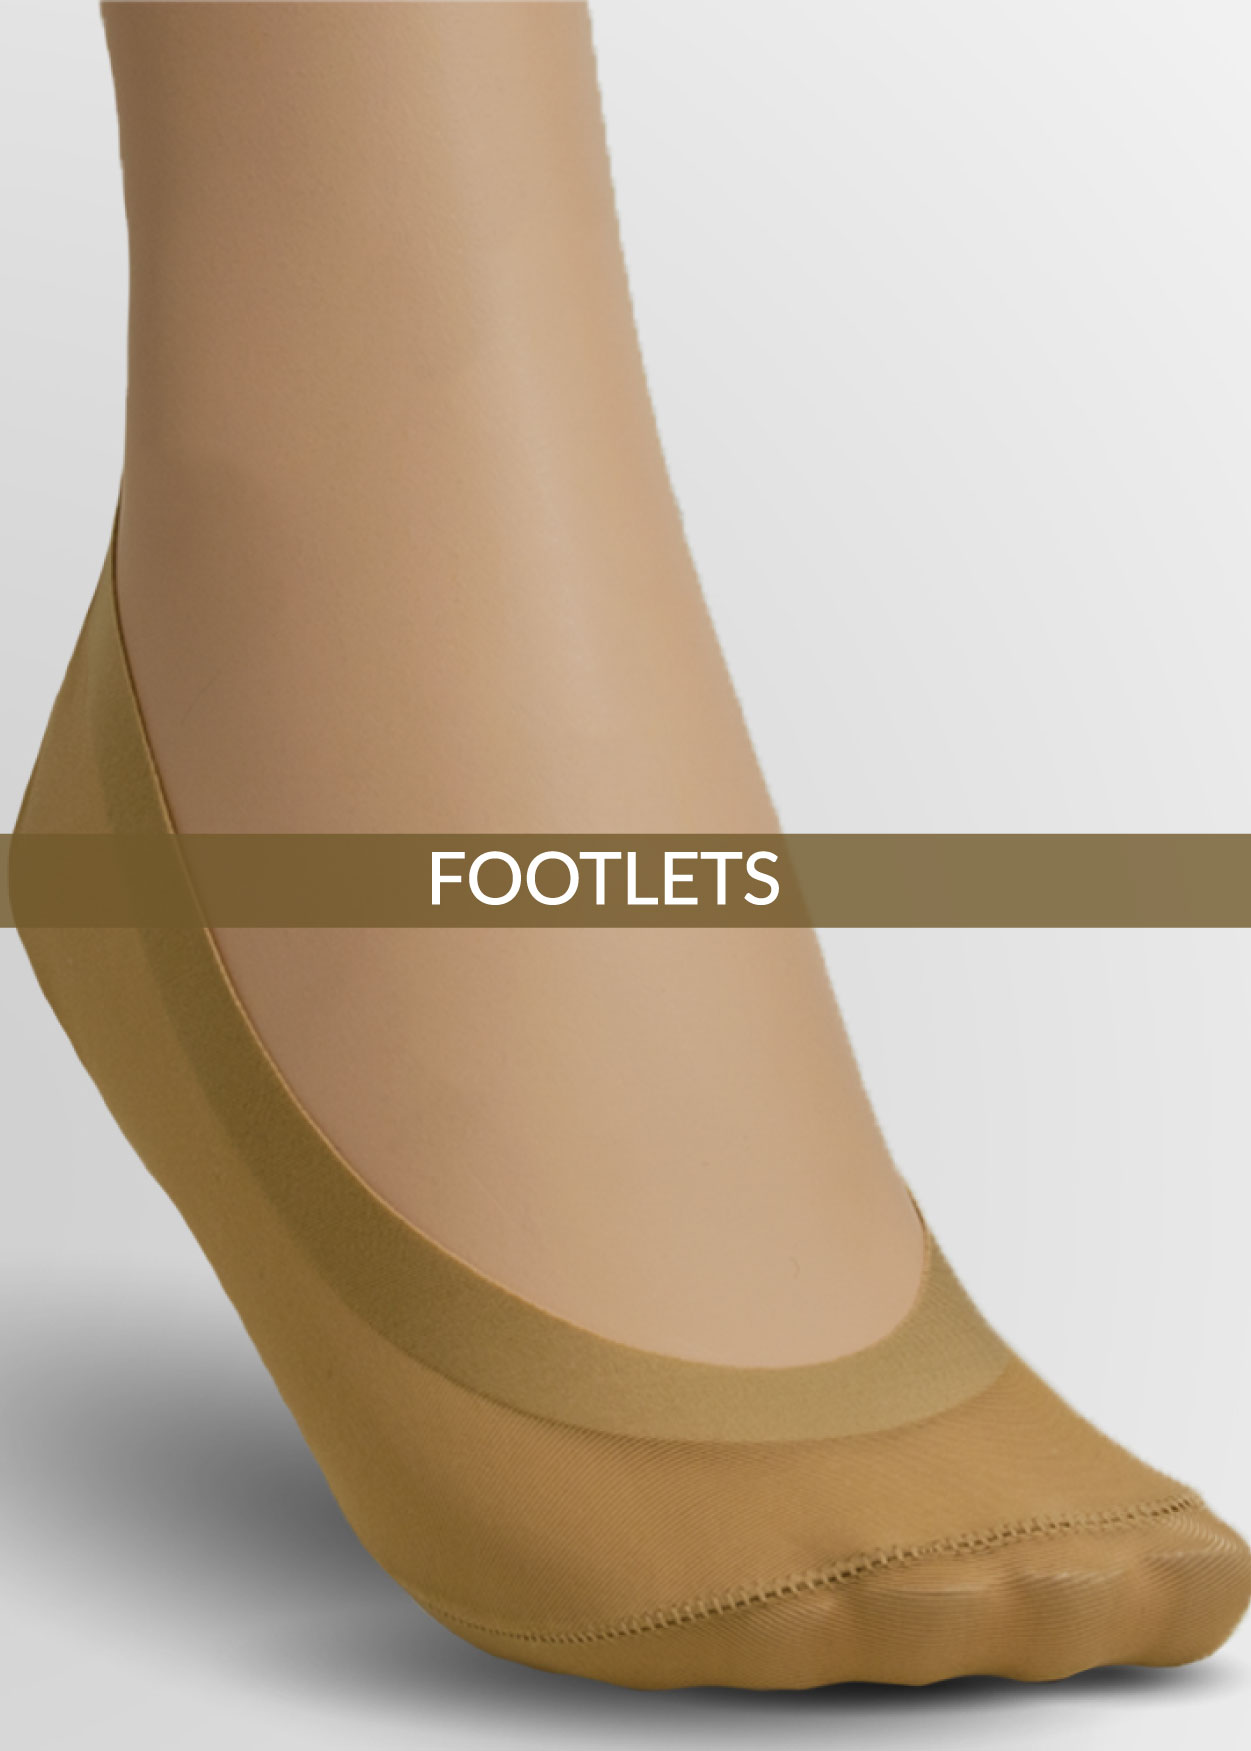 Footlets